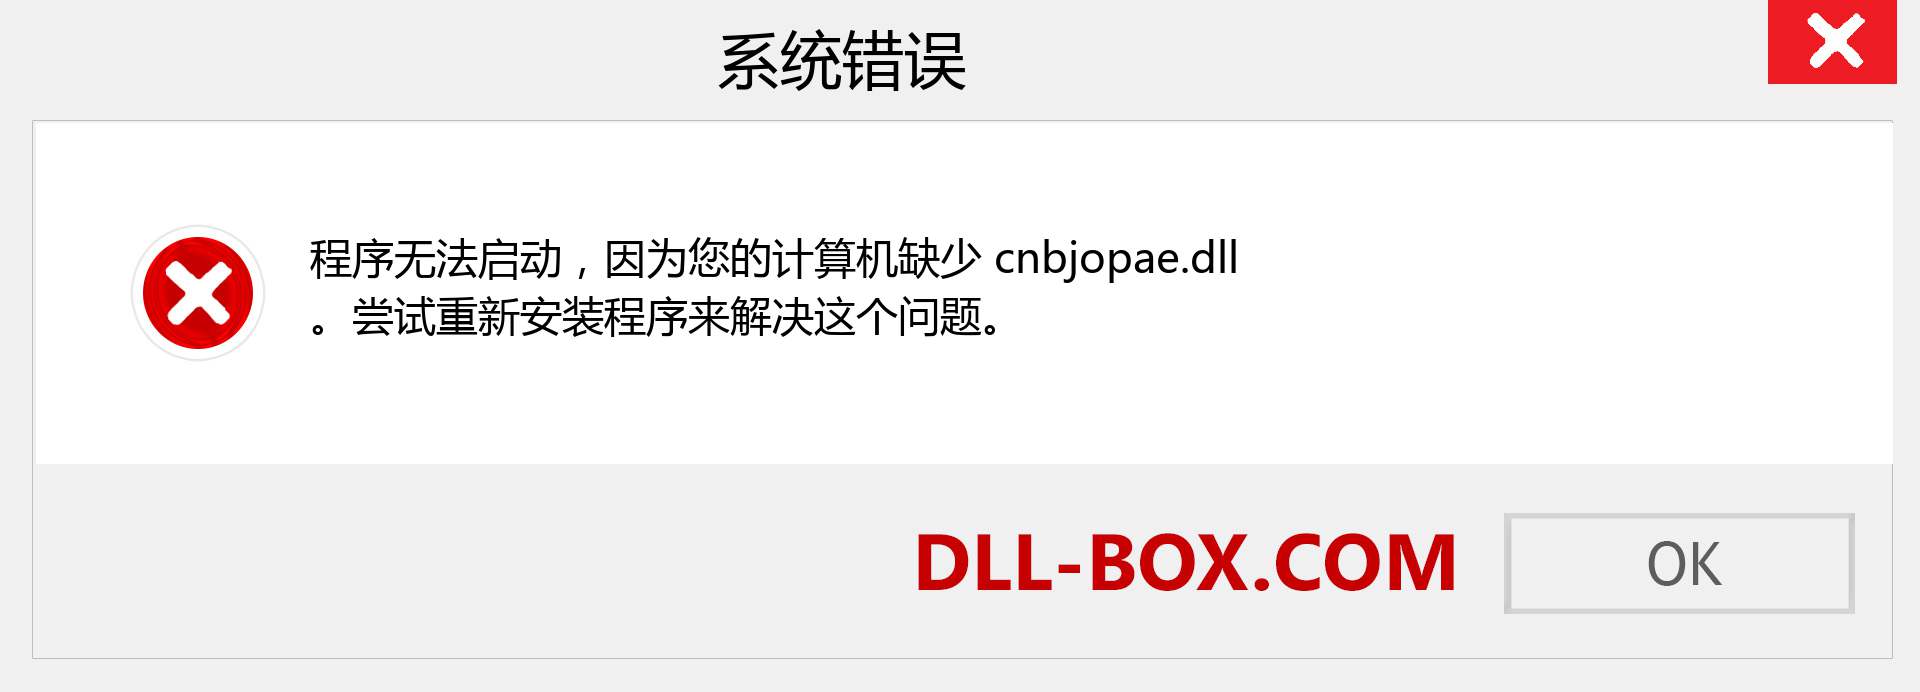 cnbjopae.dll 文件丢失？。 适用于 Windows 7、8、10 的下载 - 修复 Windows、照片、图像上的 cnbjopae dll 丢失错误